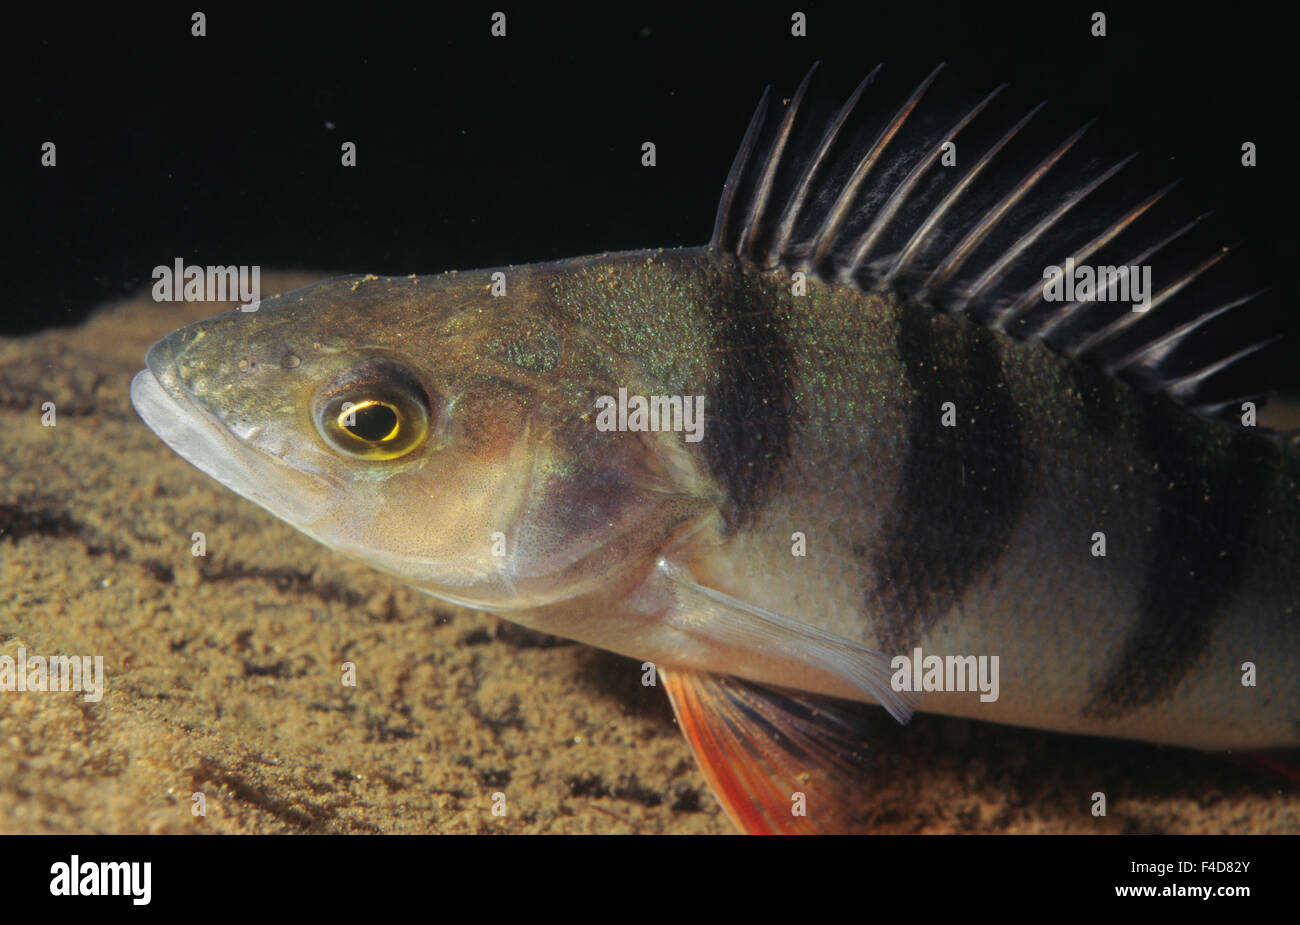 Fish, close-up Stock Photo